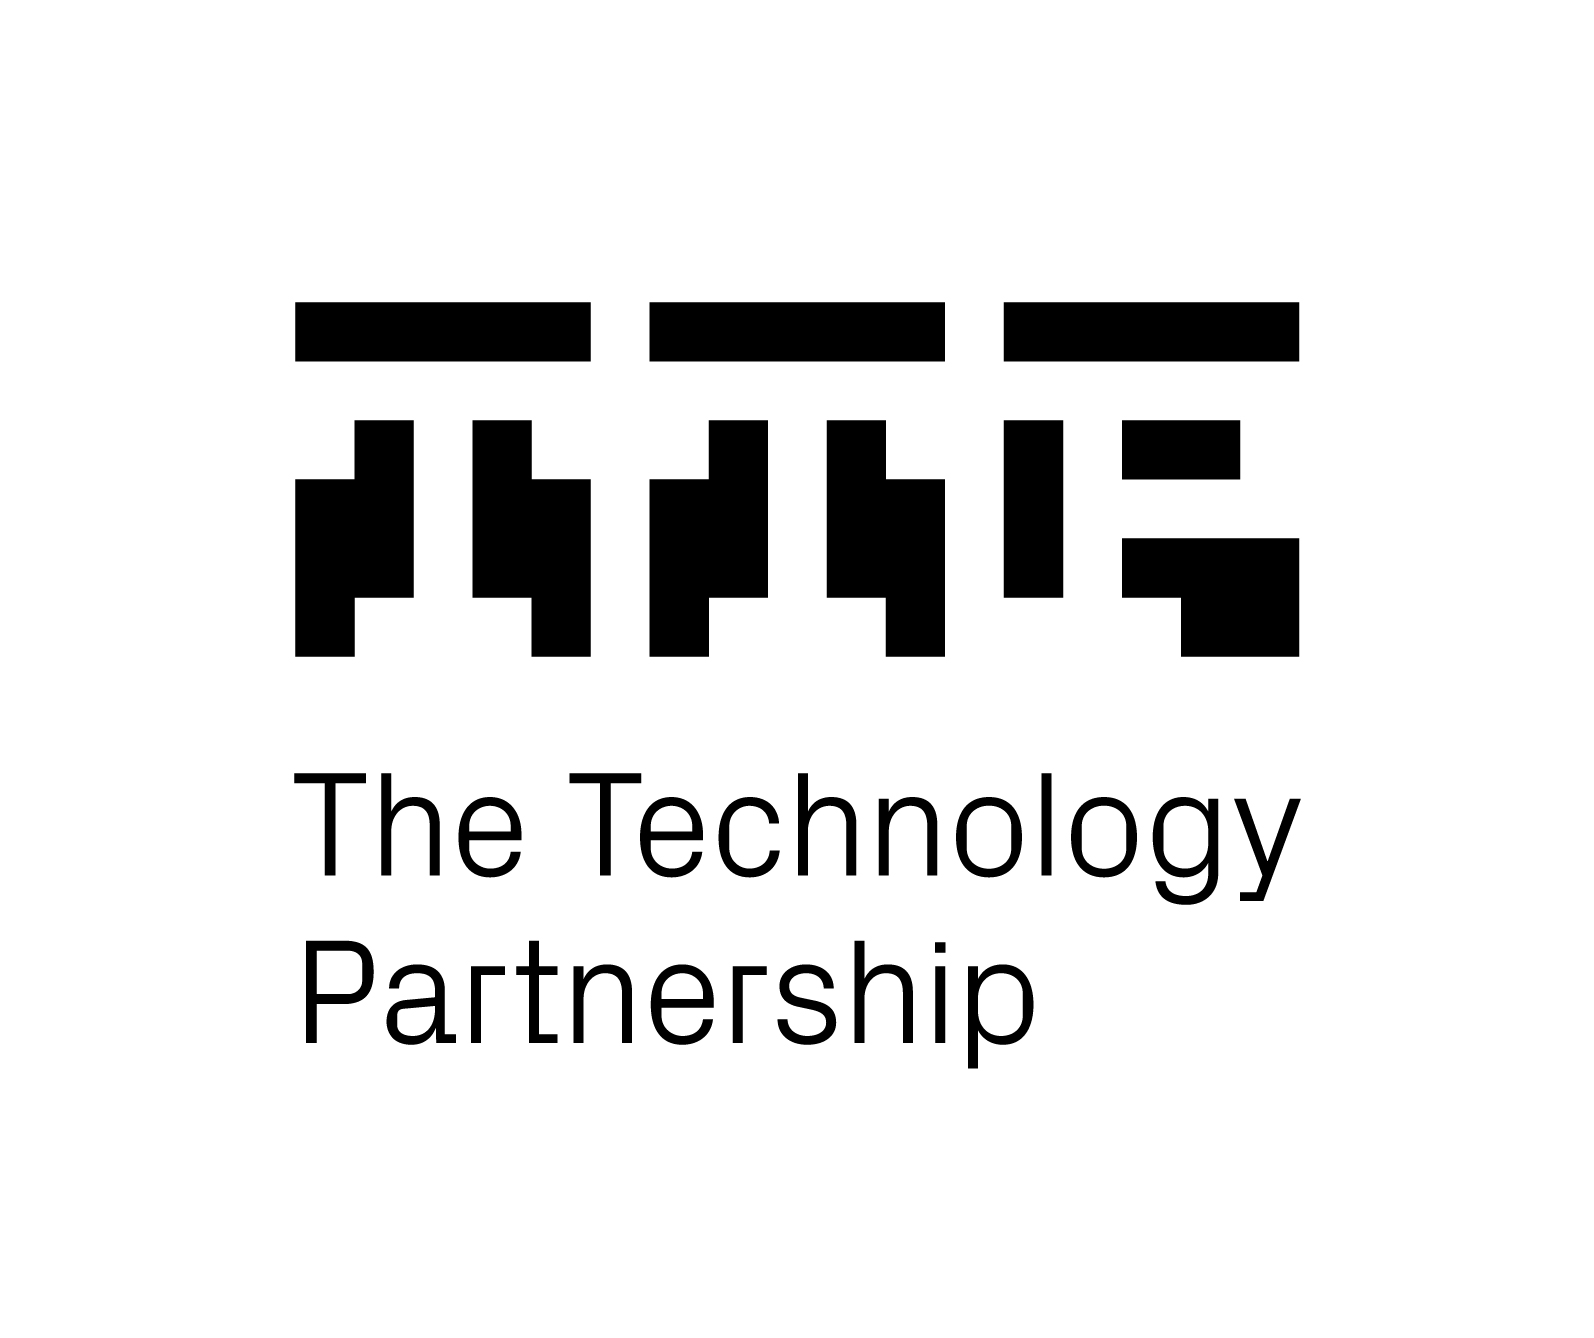 The Technology Partnership